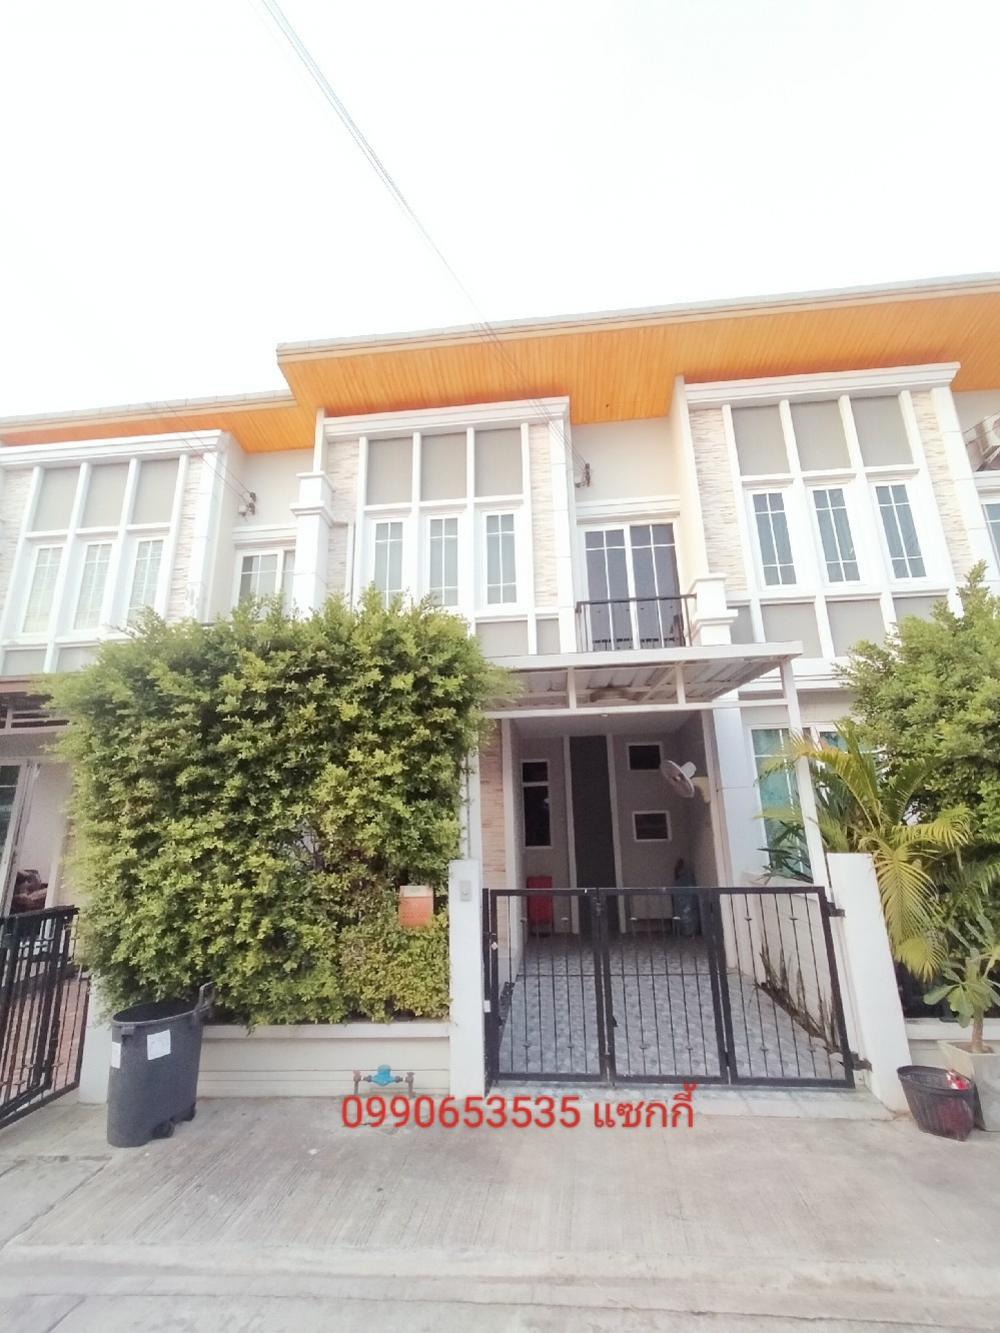 For RentTownhouseLadkrabang, Suwannaphum Airport : ⚡ For rent, 2-story townhome, Golden Town (Bangna - Suan Luang), size 16.30 sq m. ⚡